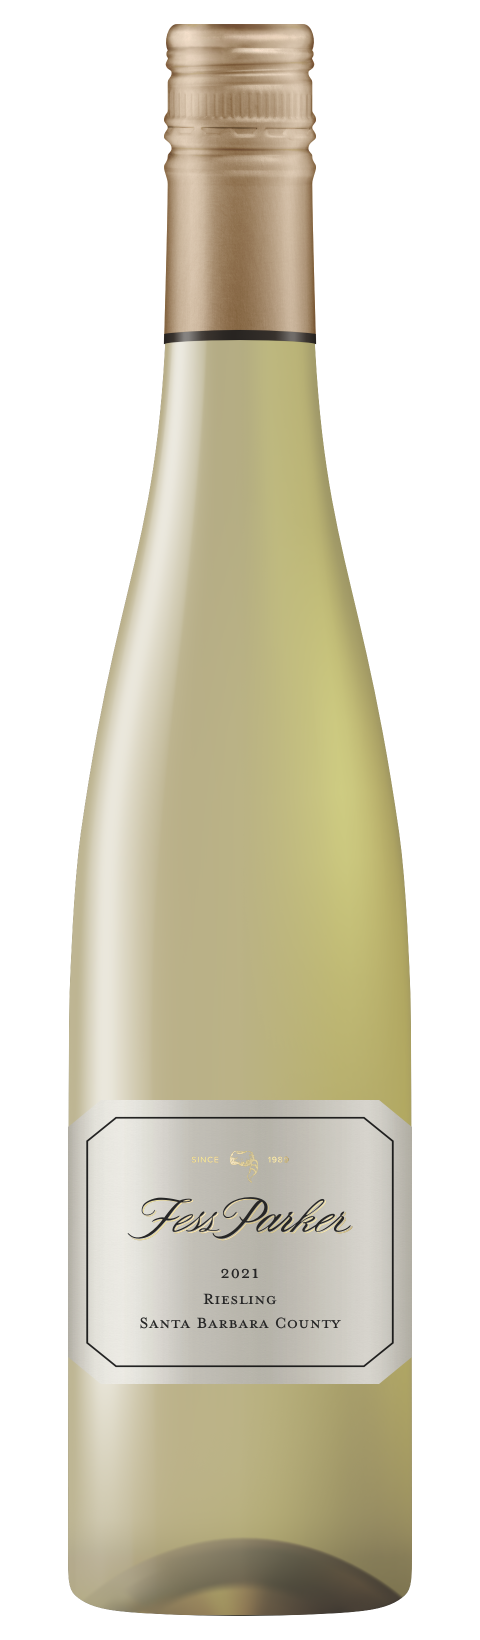 Bottle shot of Santa Barbara County Riesling